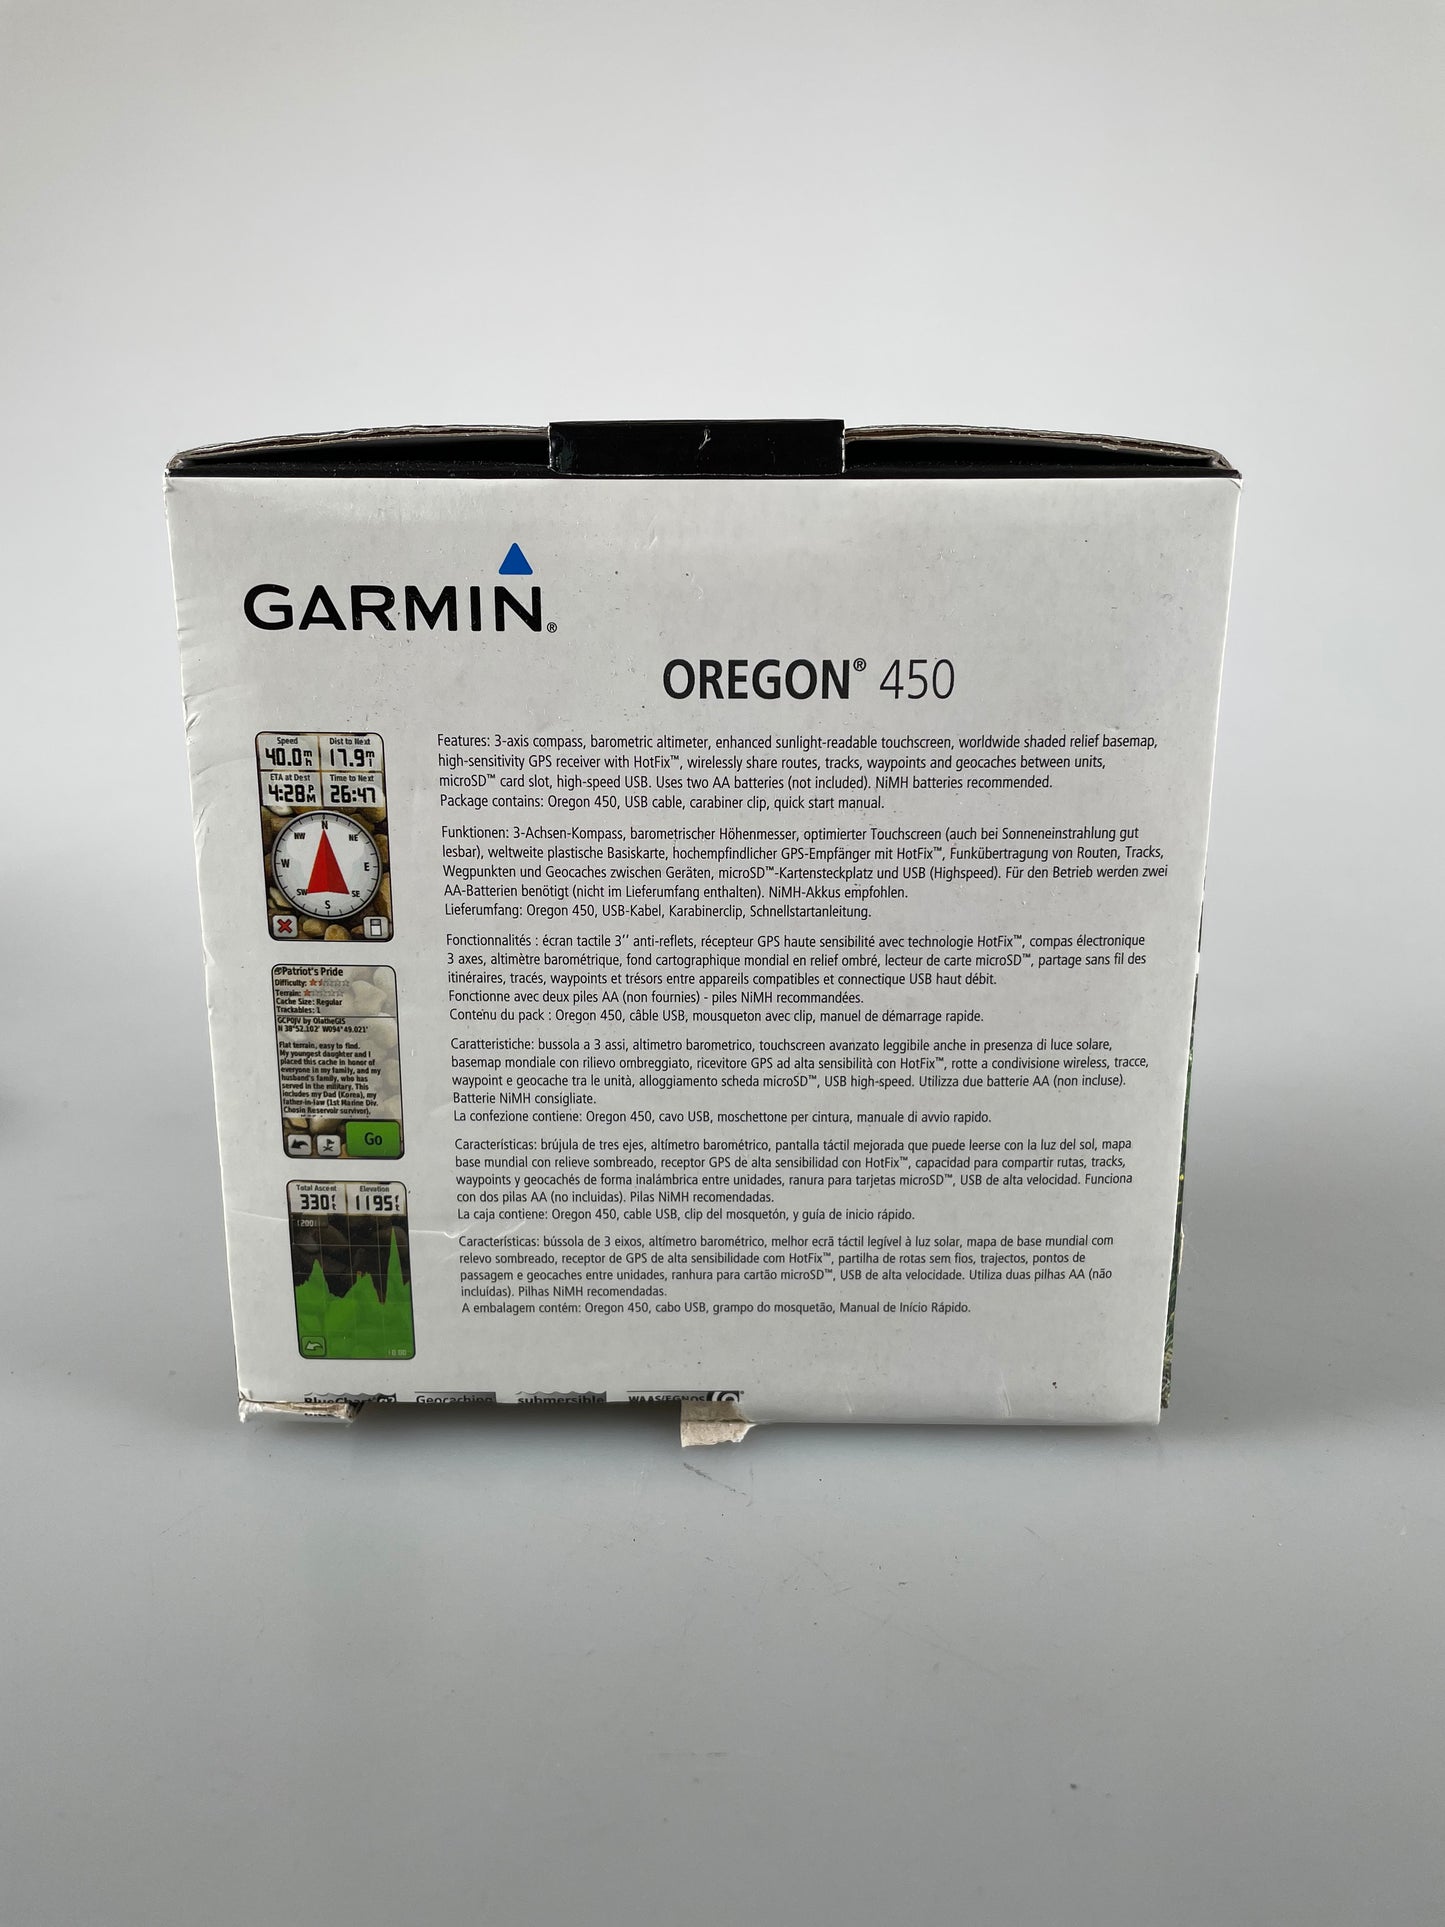 Garmin Oregon 450 - Handheld GPS Navigator Weatherproof Outdoors